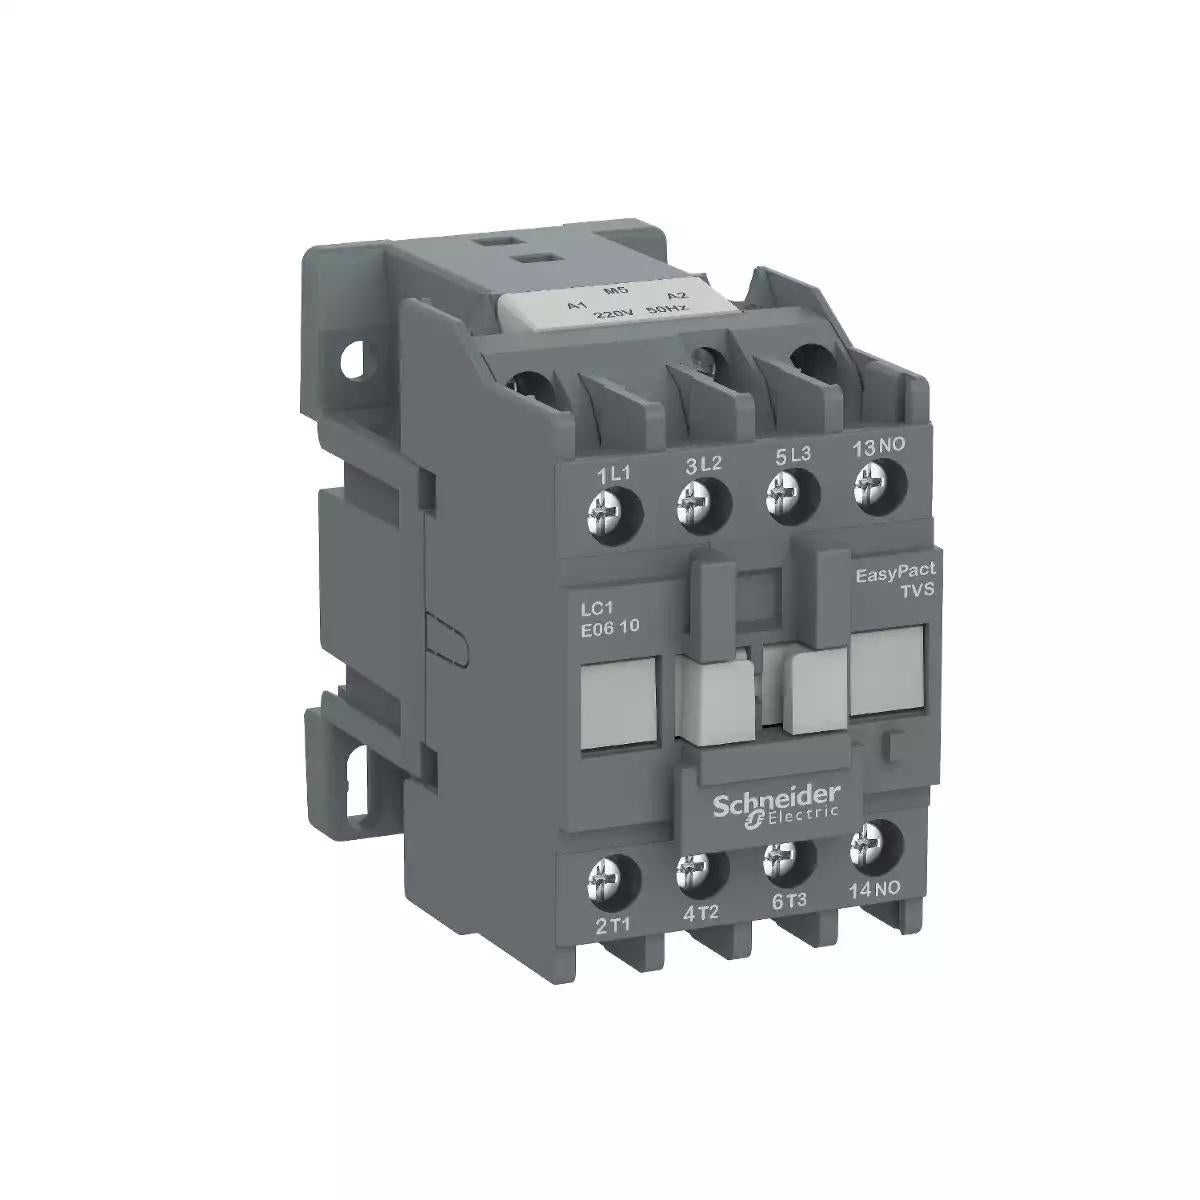 Contactor,EasyPact TVS,3P(3NO),AC-3,<=440V,12A,230V AC coil,50/60Hz,1NO auxiliary contact